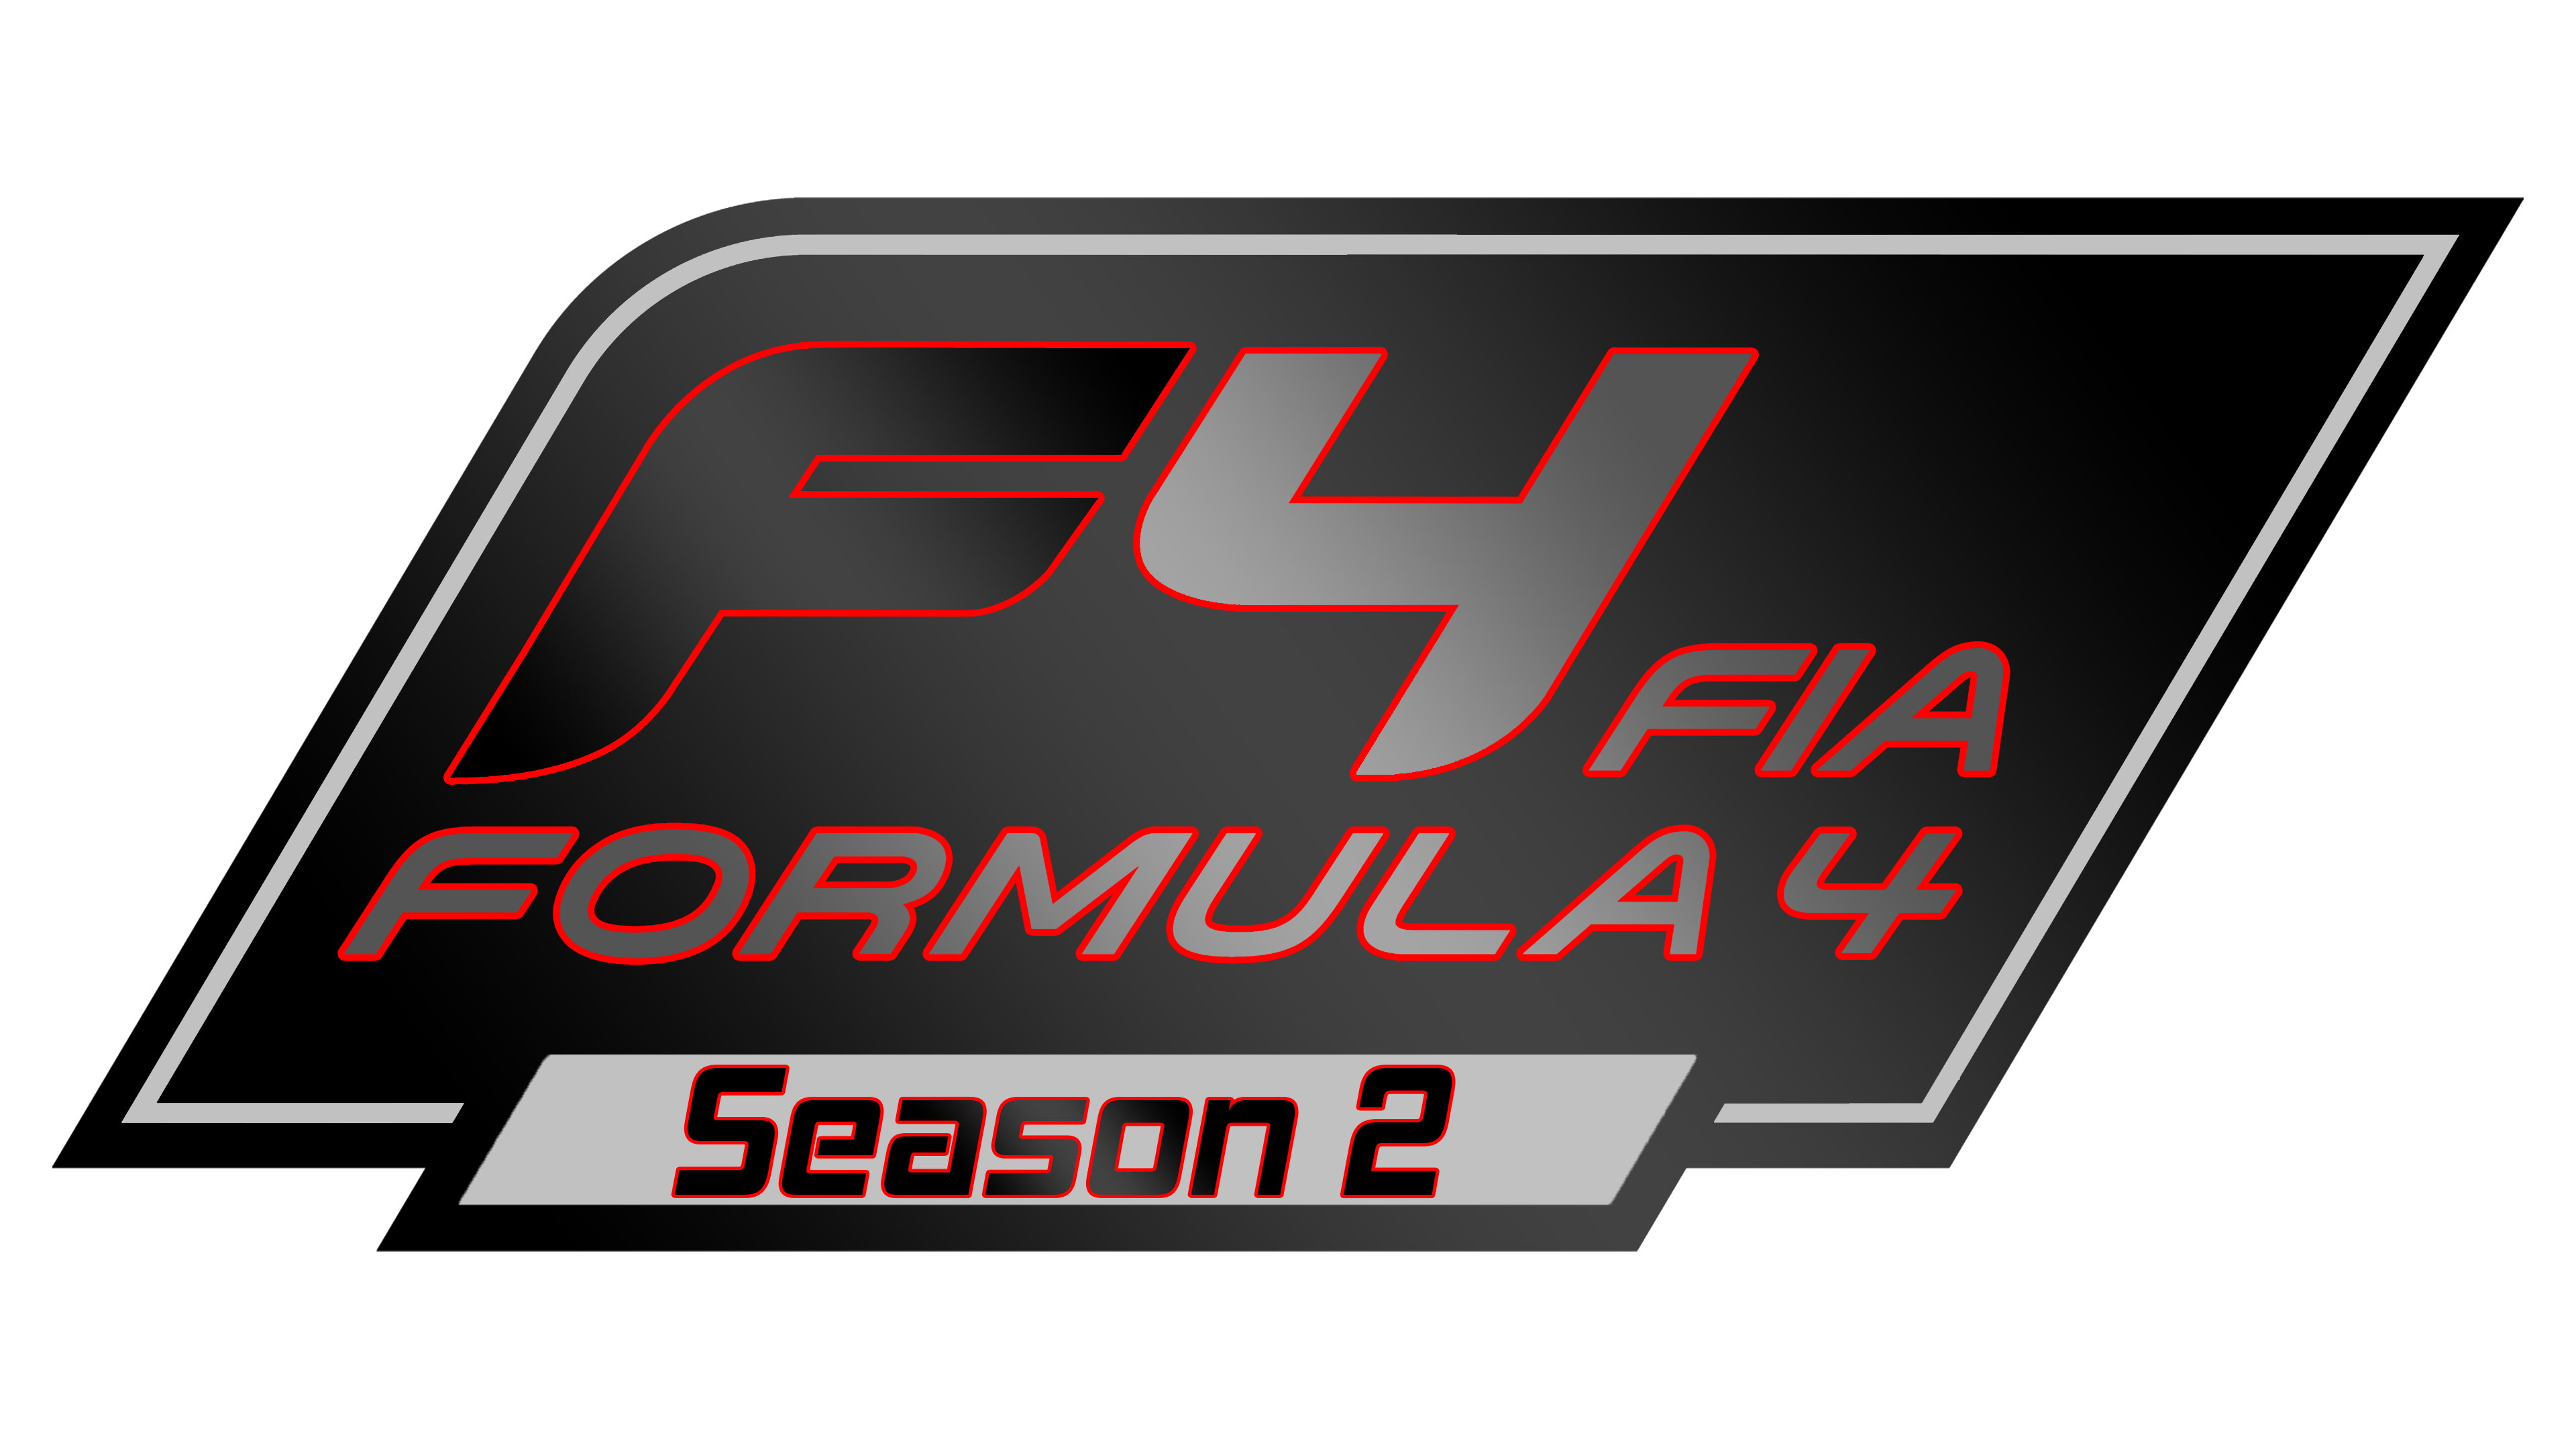 Formula 4